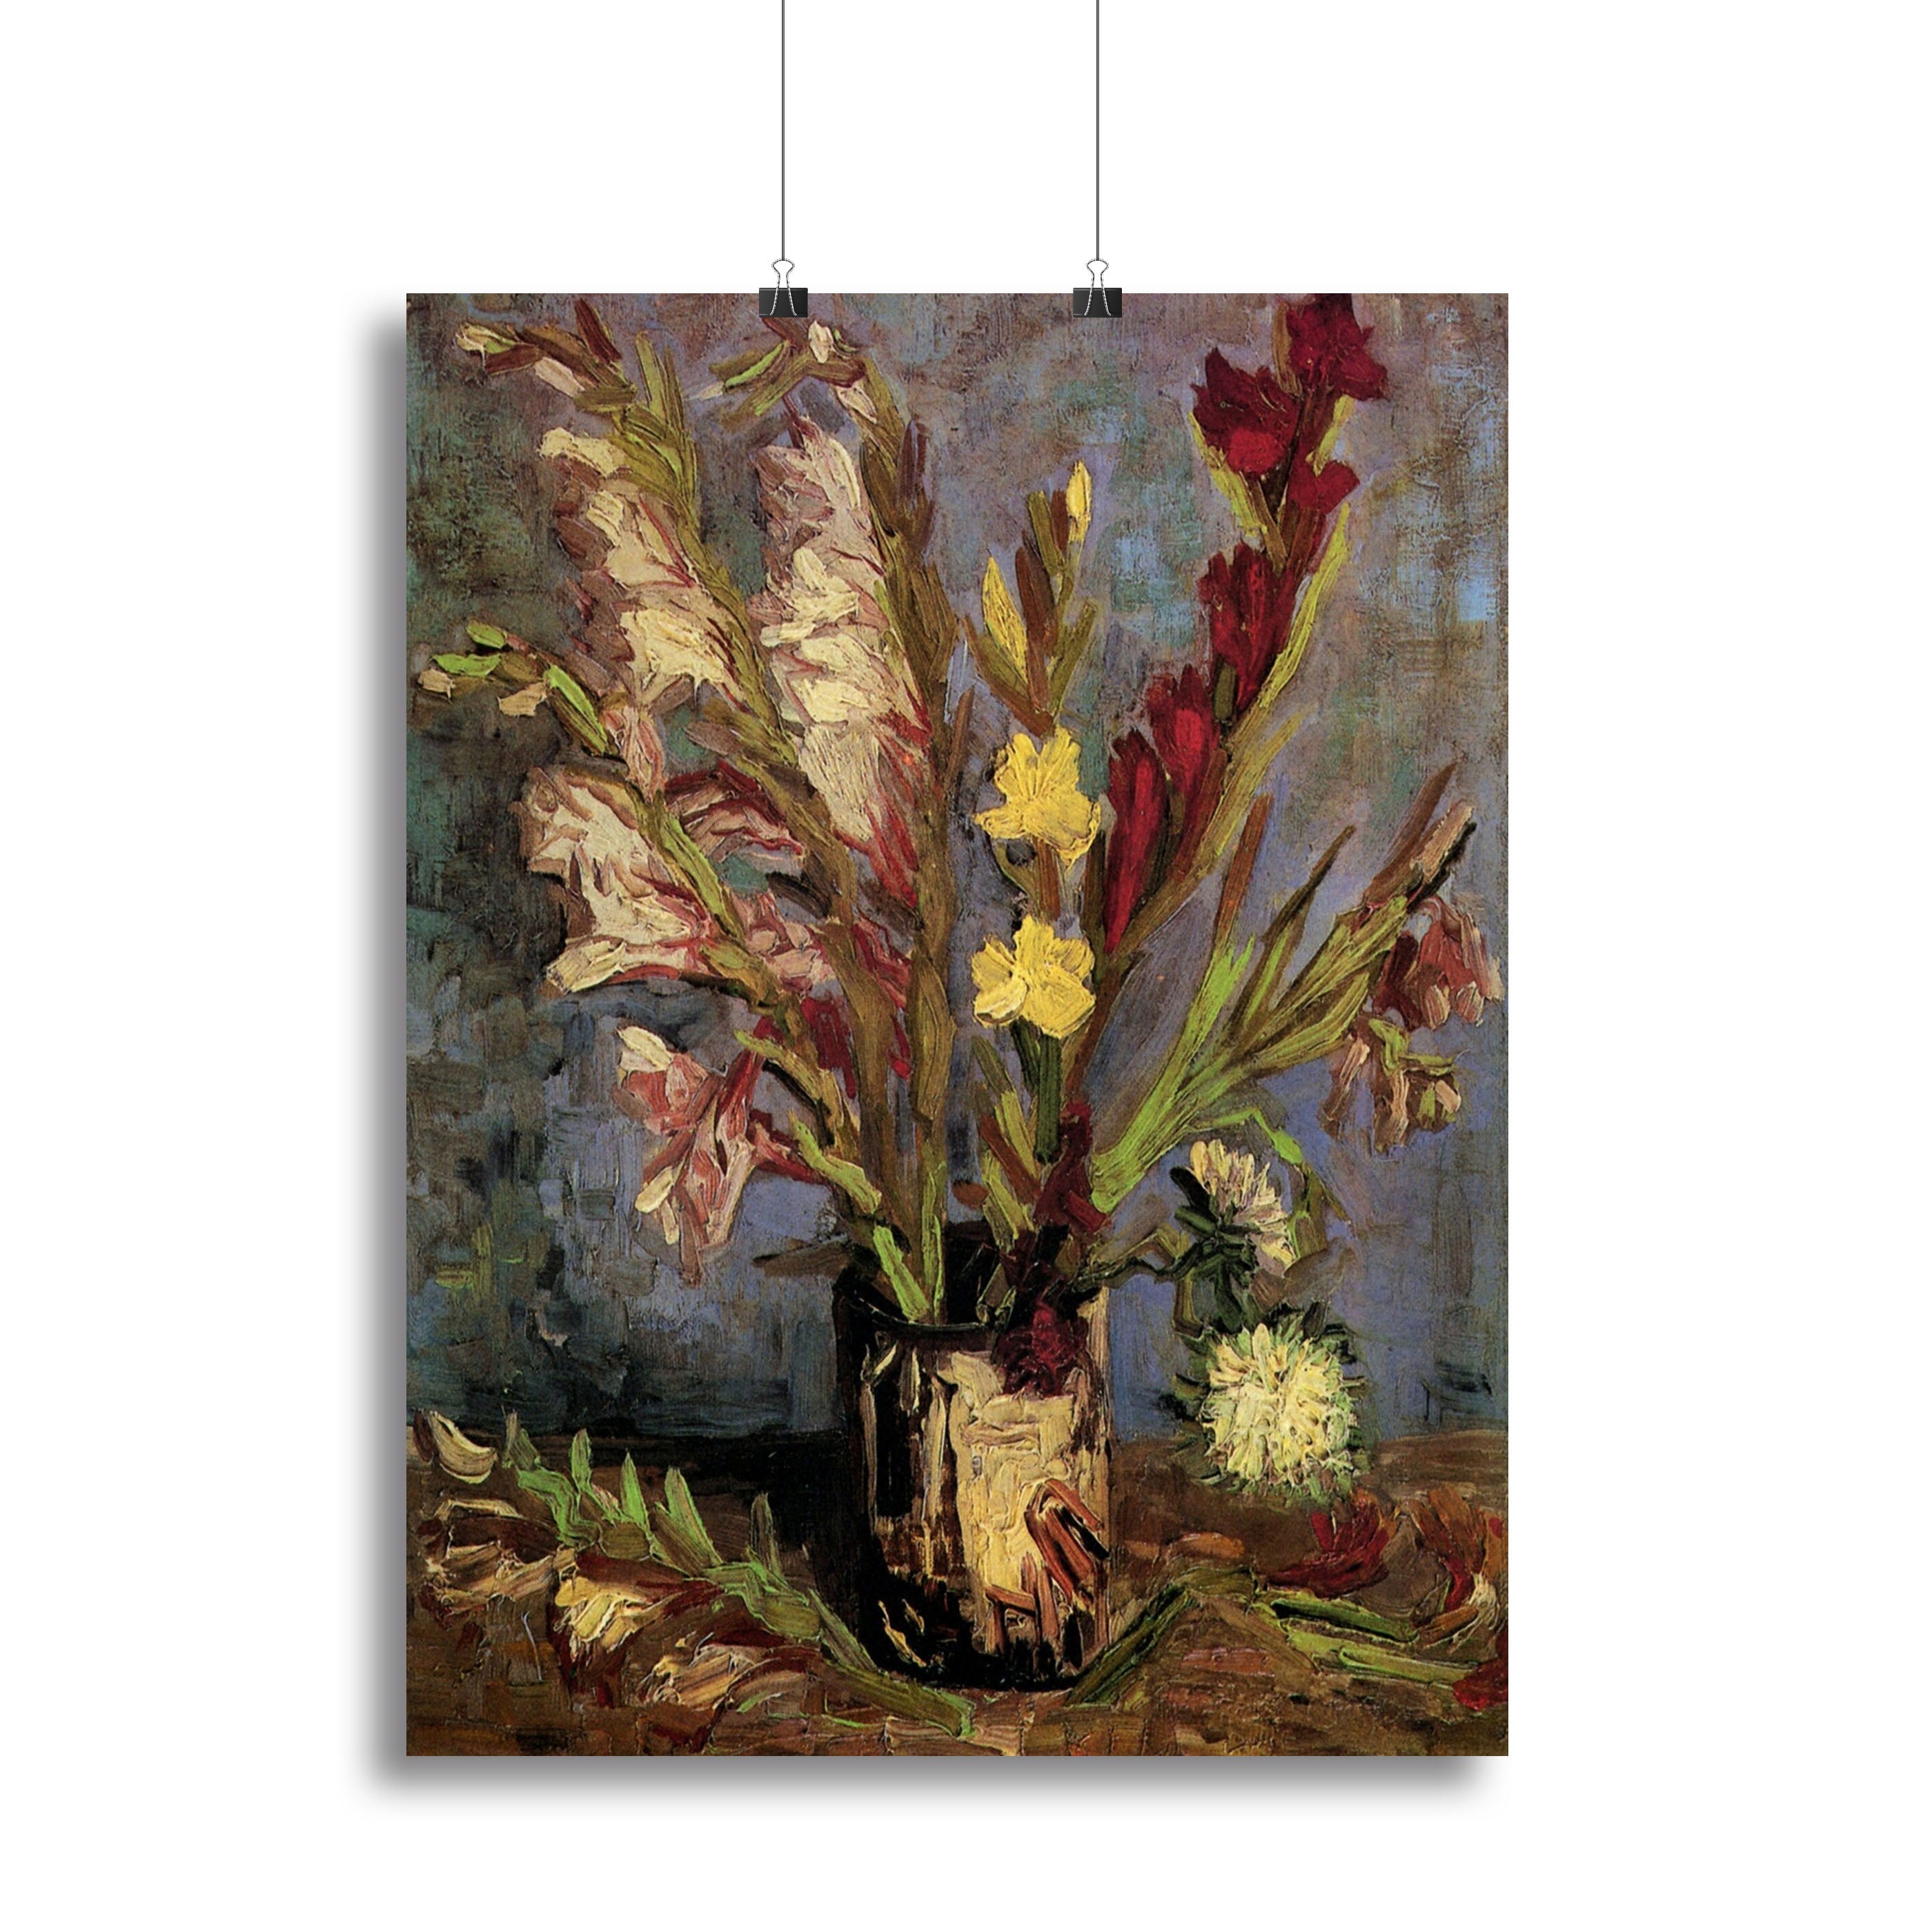 Vase with Gladioli 4 by Van Gogh Canvas Print or Poster - Canvas Art Rocks - 2